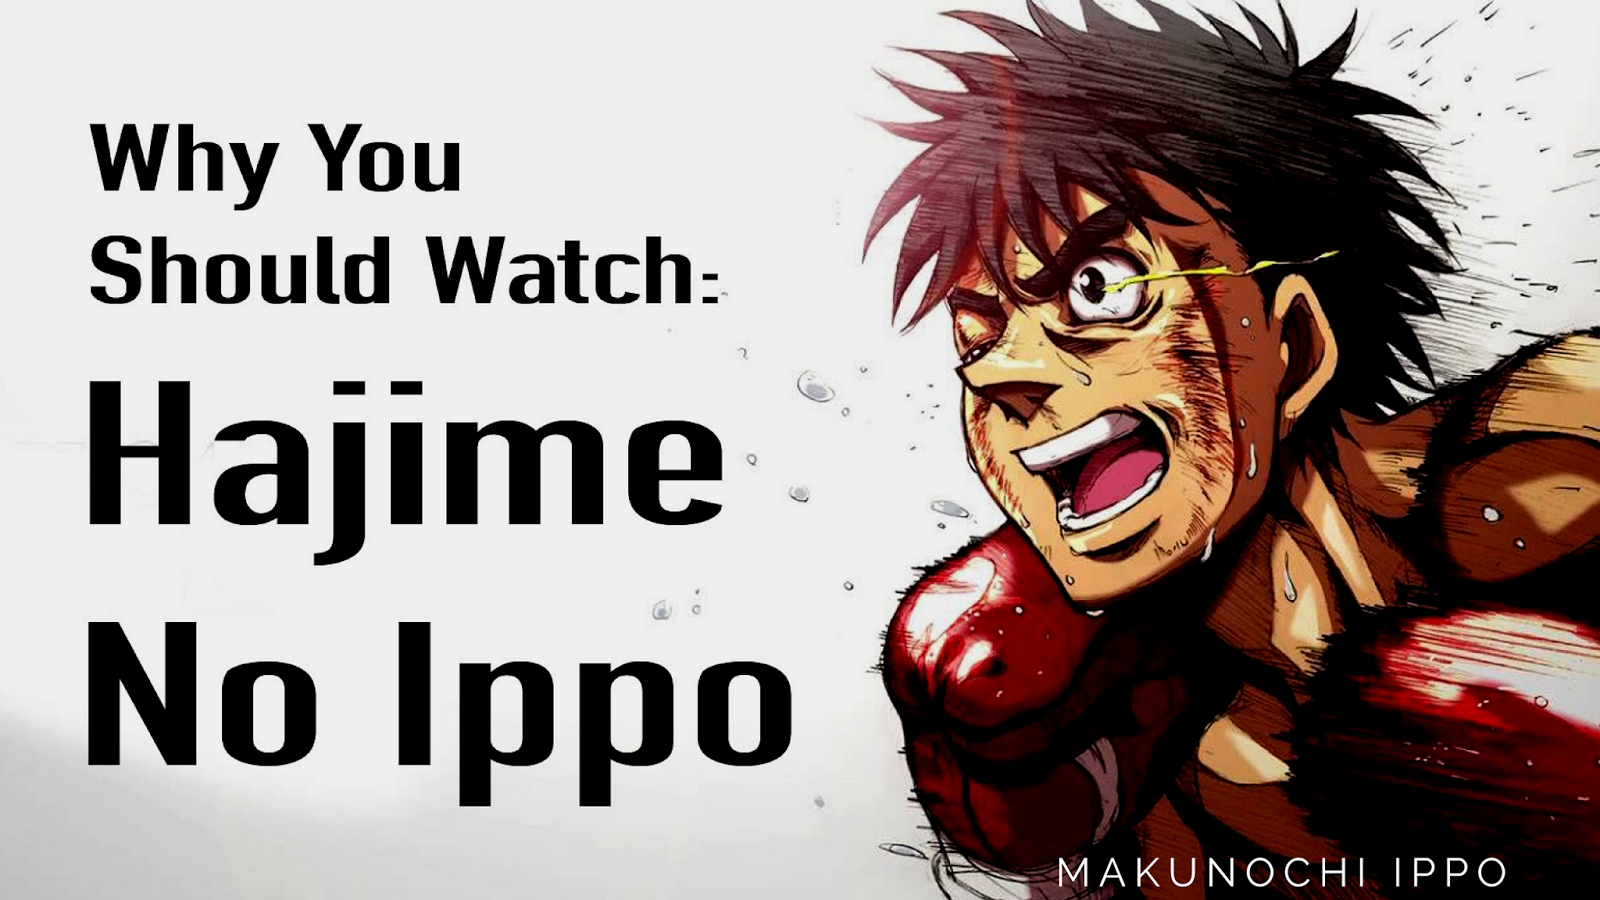 Kimura Geek: “Hajime no ippo”